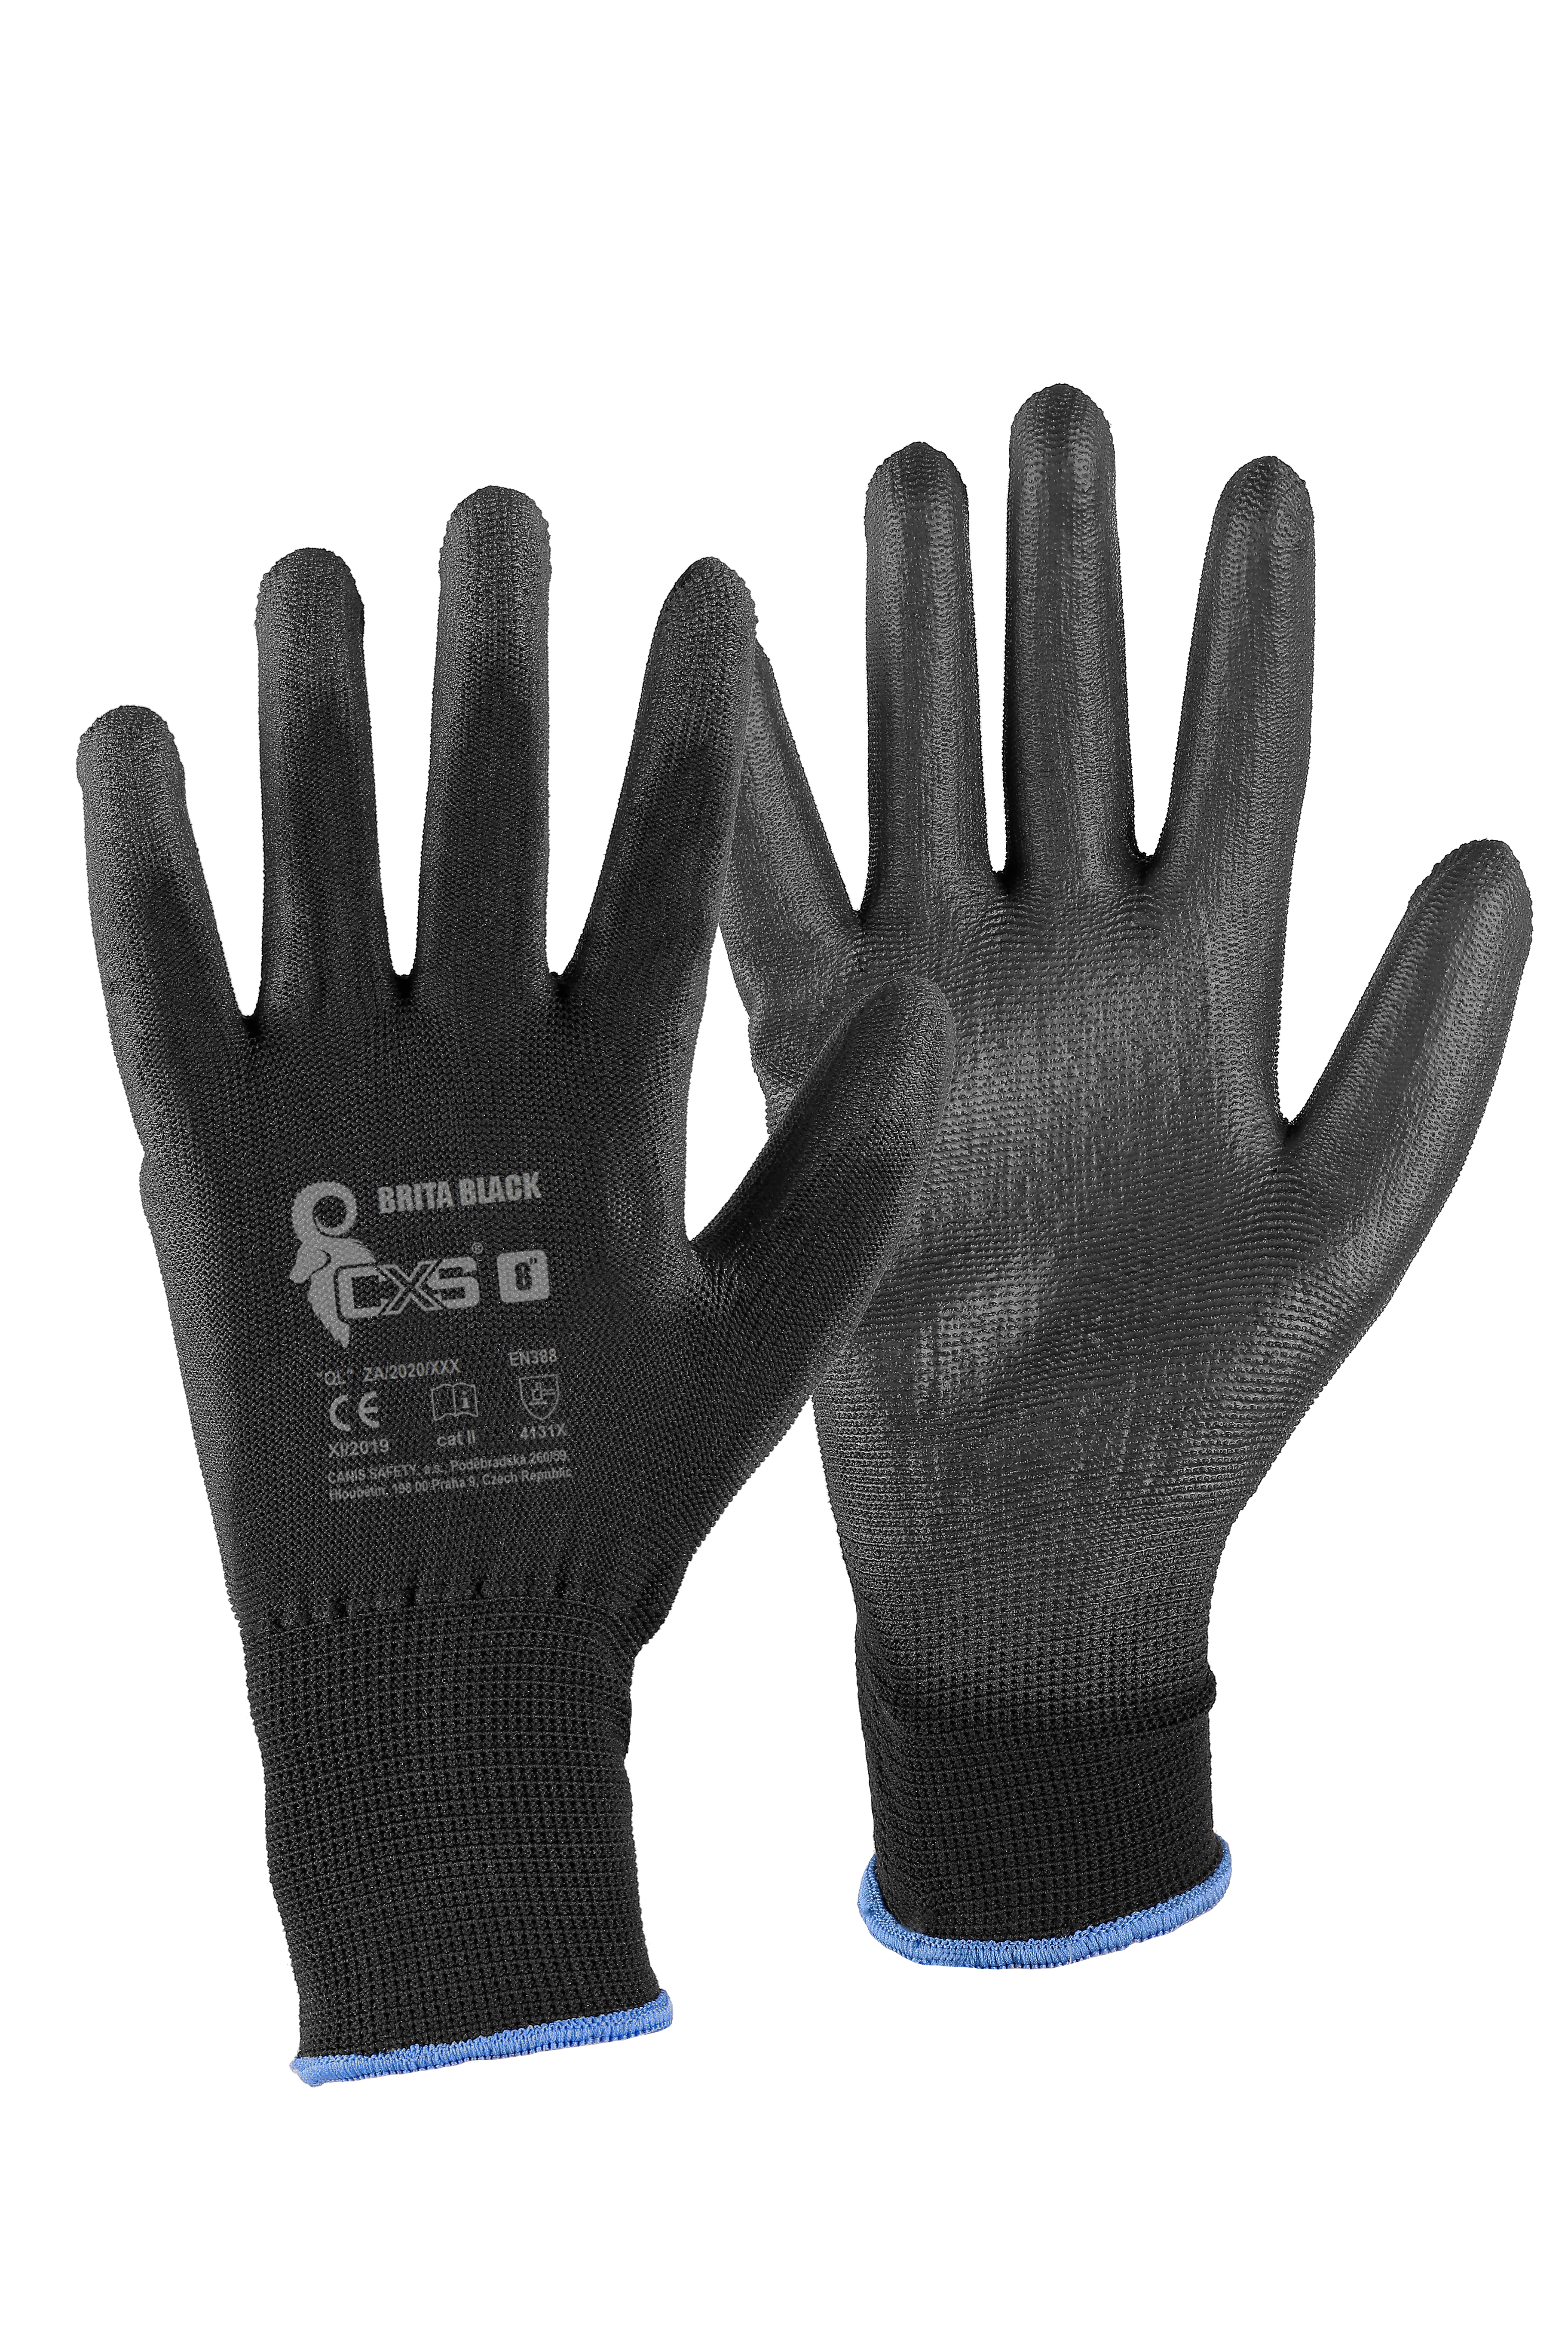 rukavice BRITA BLACK, s PU dlaní a úpletem, velikost 7 0.02 Kg TOP Sklad4 606046 56